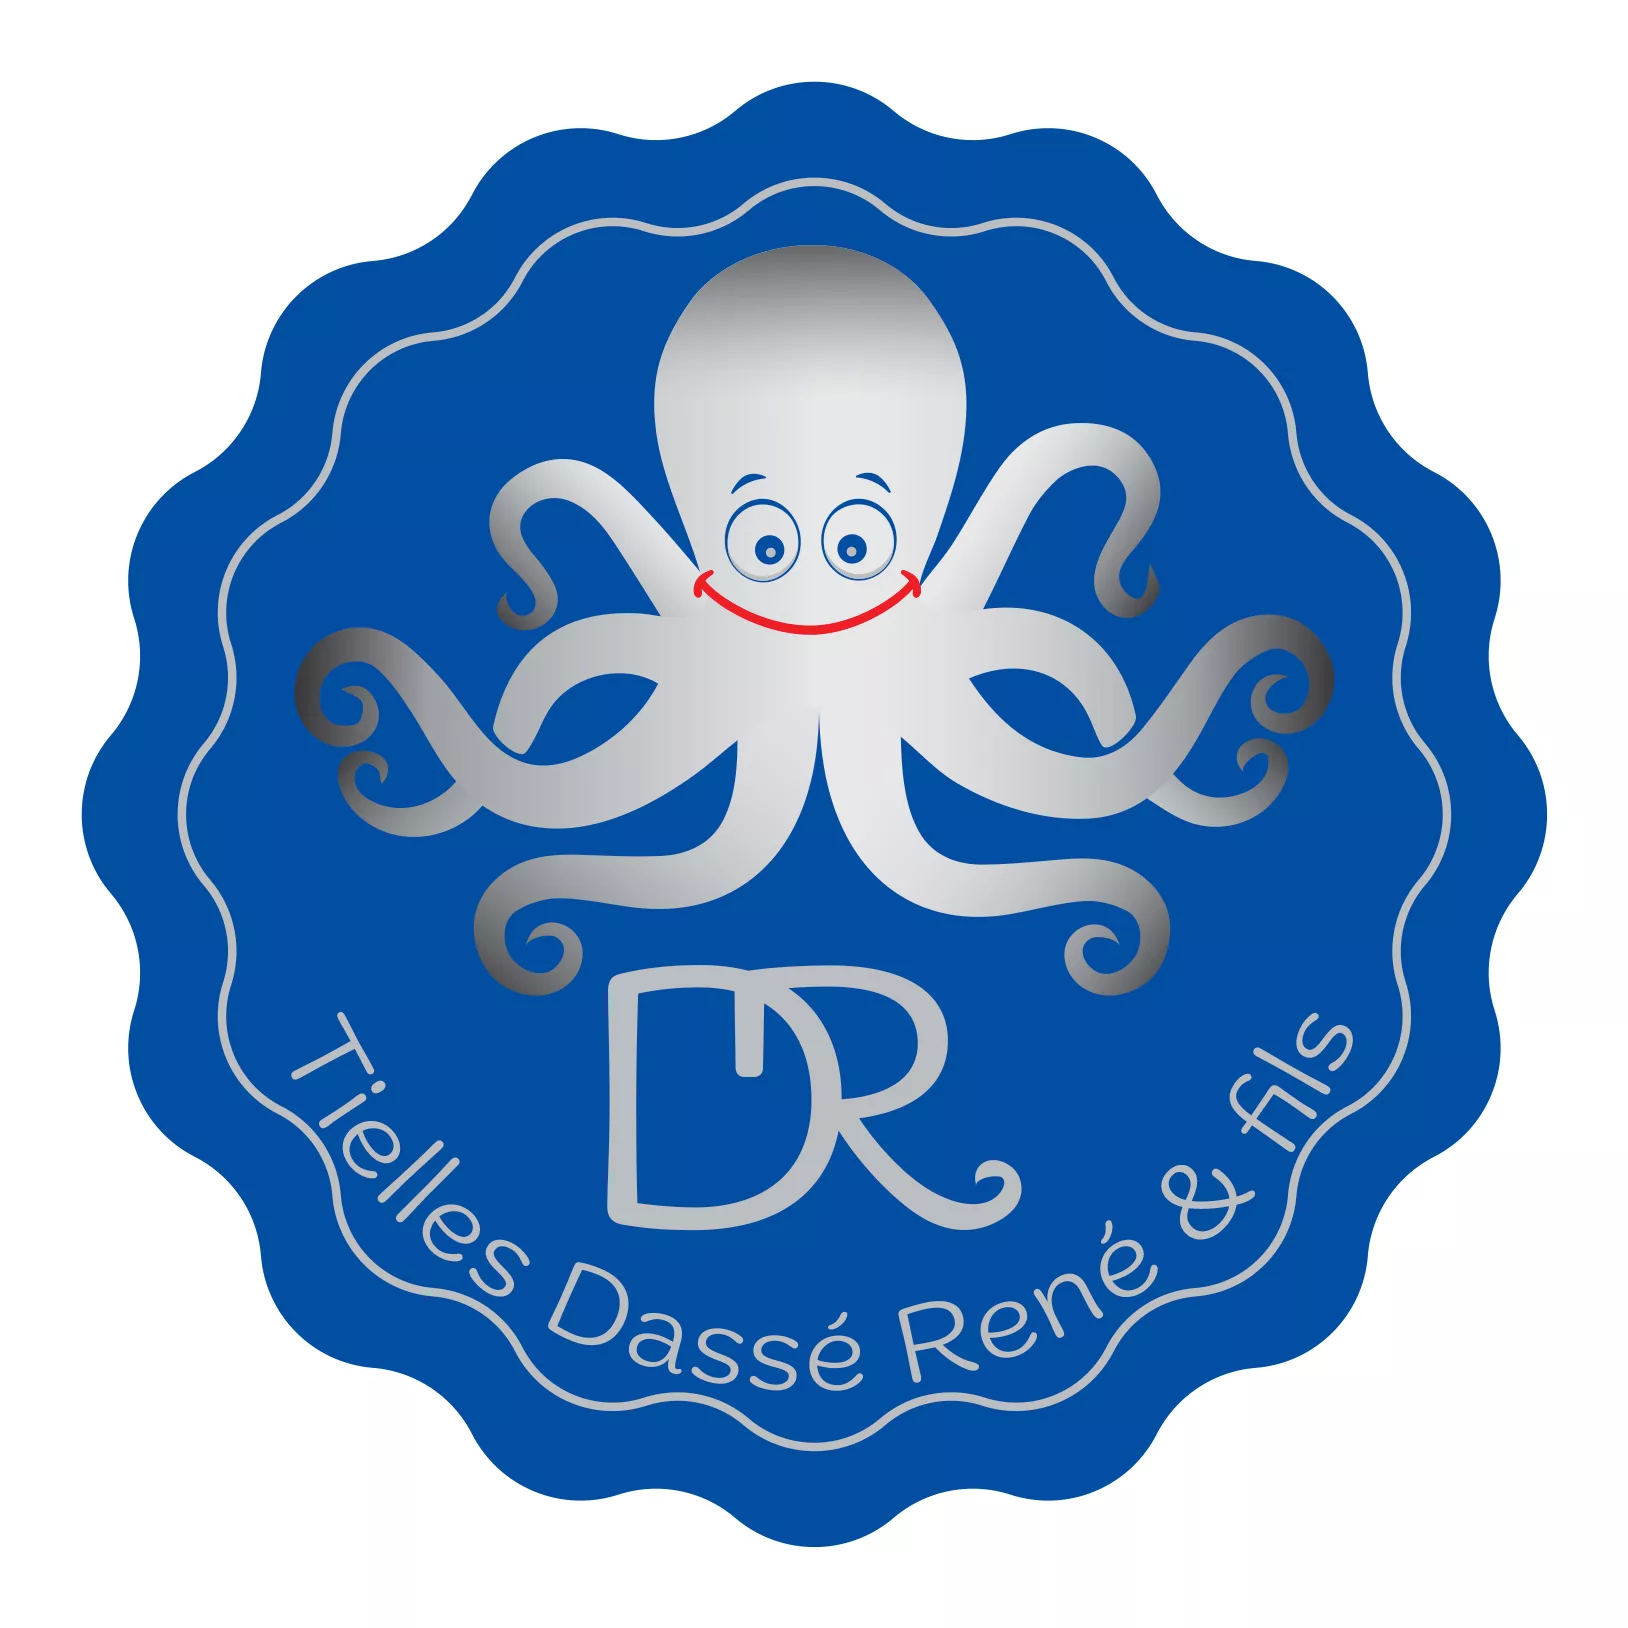 Tielles DR - Logo de Tielles Dassé René & Files